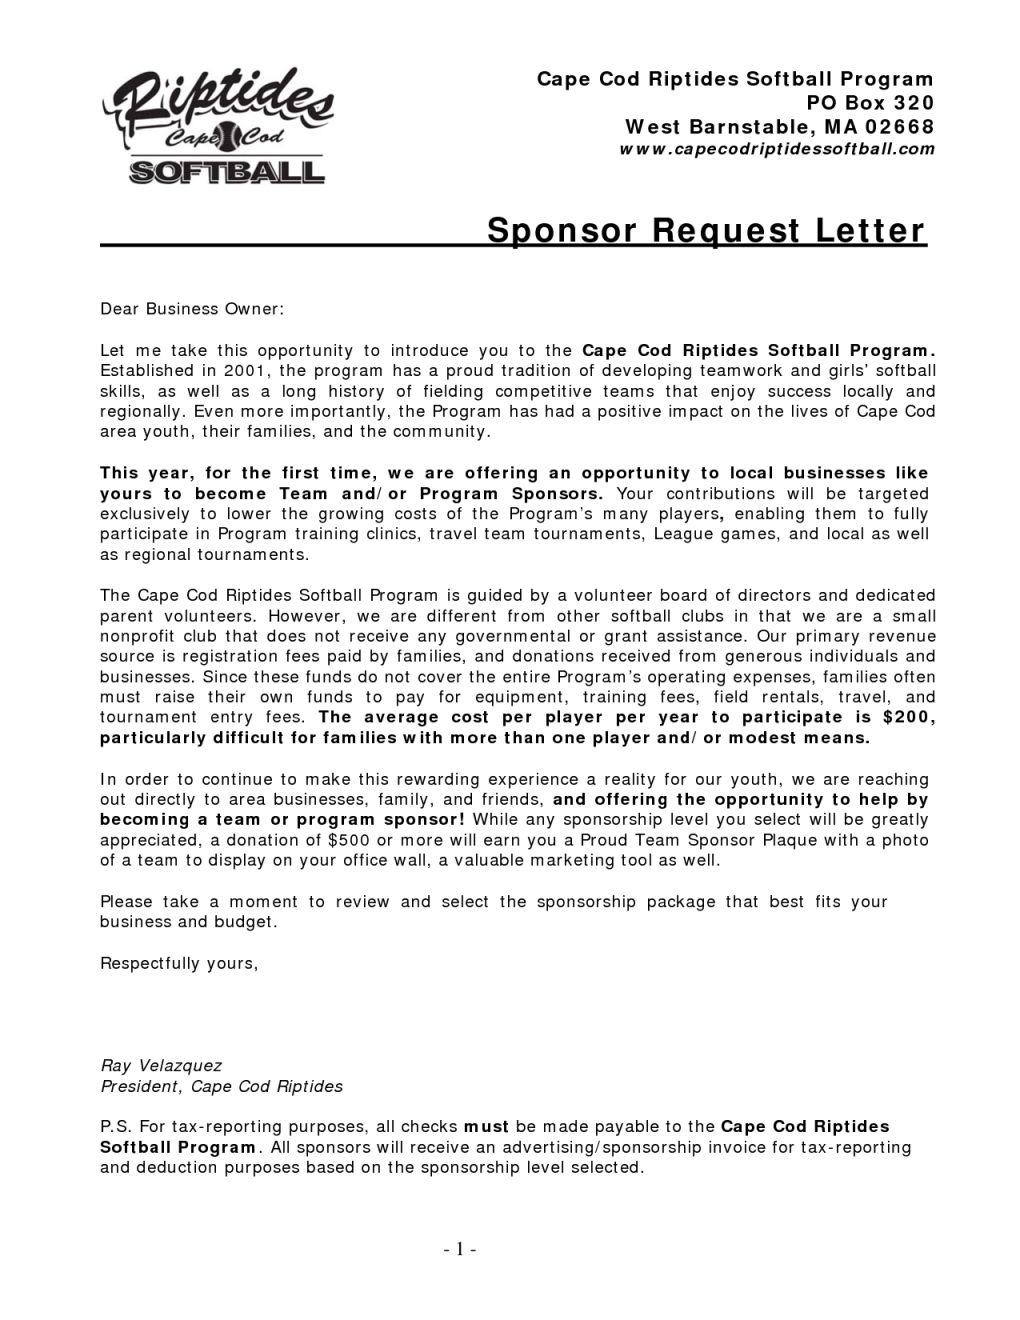 Baseball Sponsorship Letter Template Samples Letter Template Collection